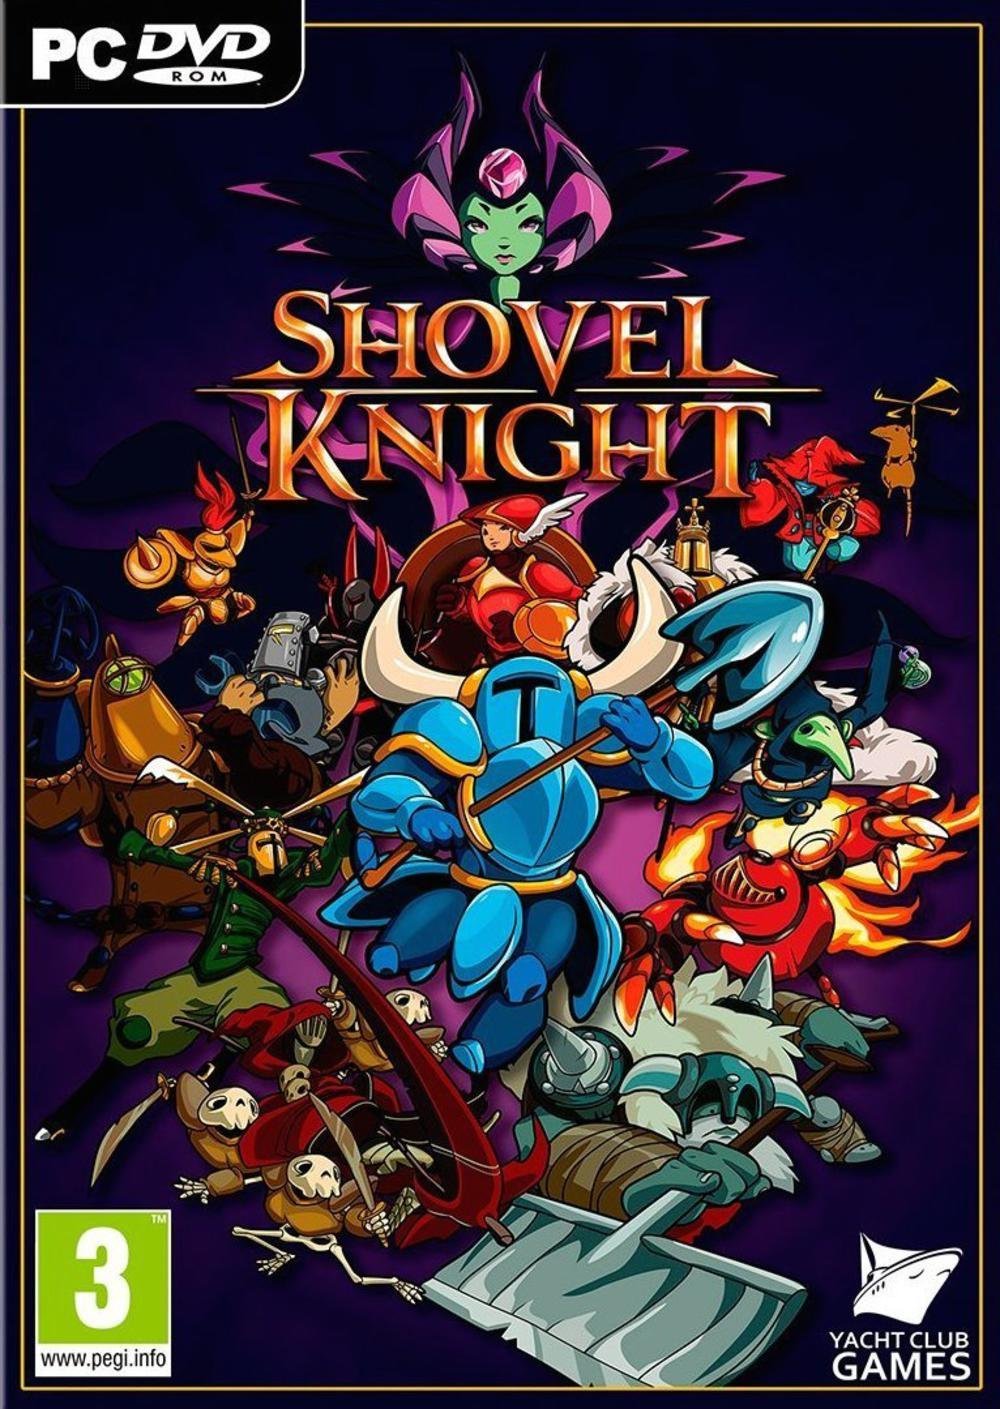 Shovel Knight (PC), Yacht Club Games